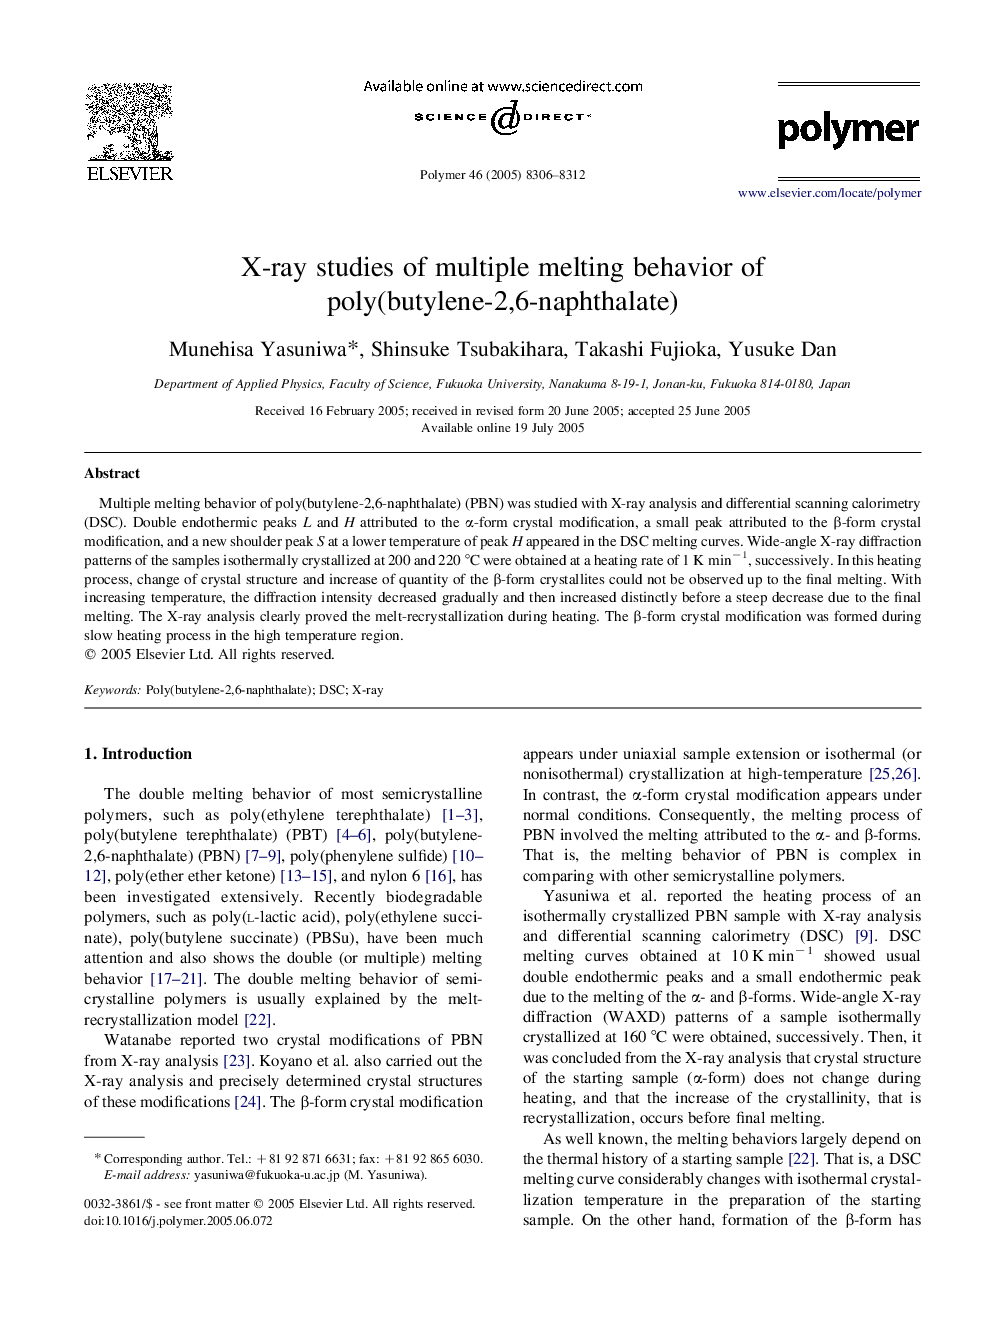 X-ray studies of multiple melting behavior of poly(butylene-2,6-naphthalate)